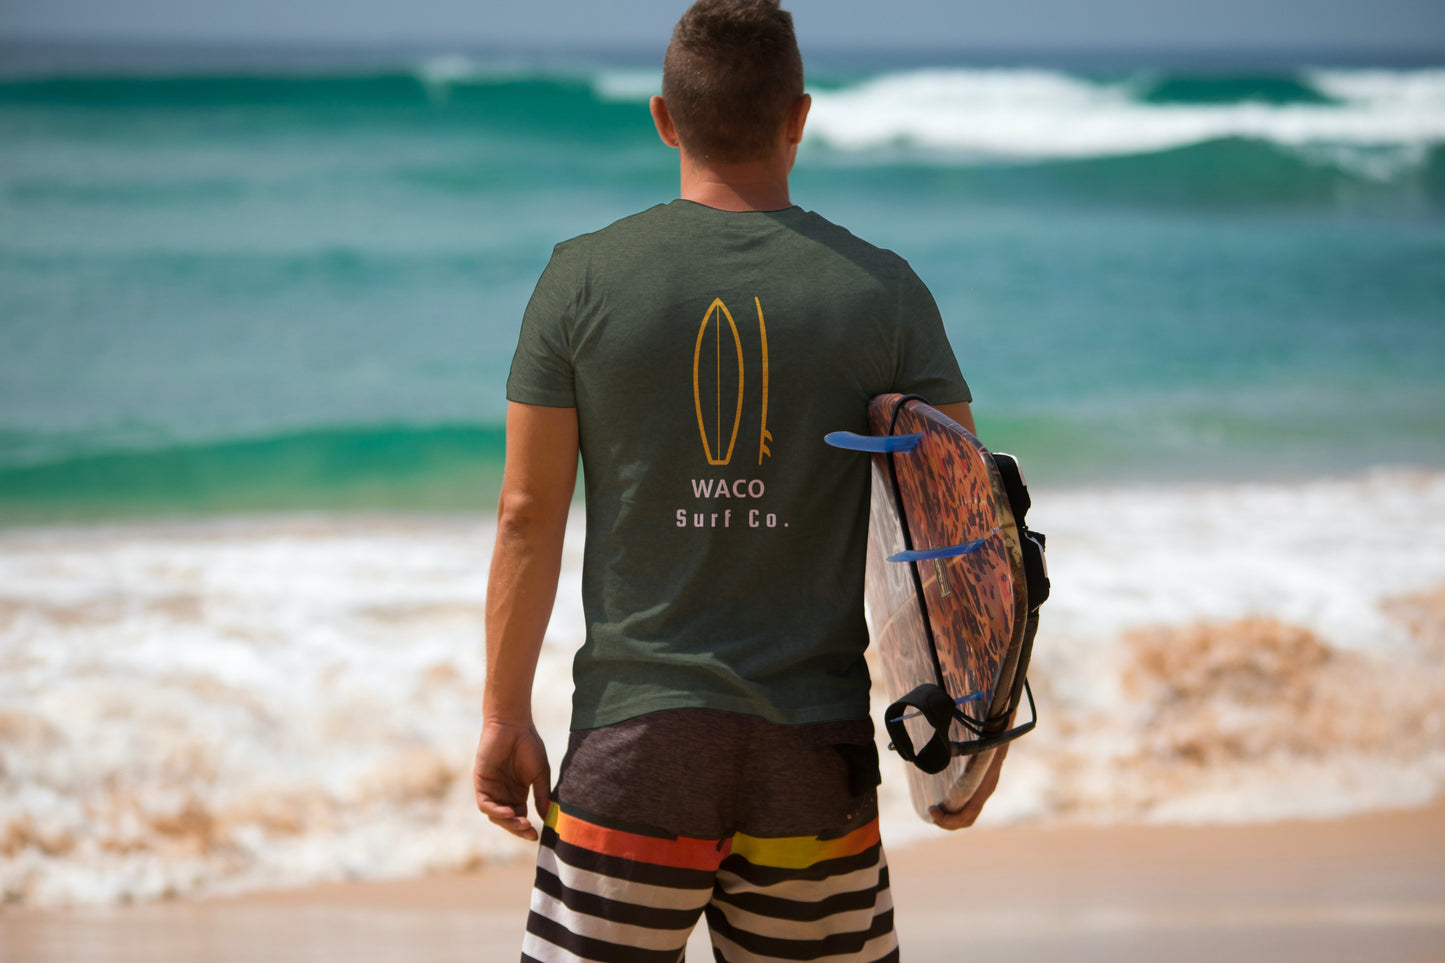 Waco Surf Co. Green Surfboard Shirt